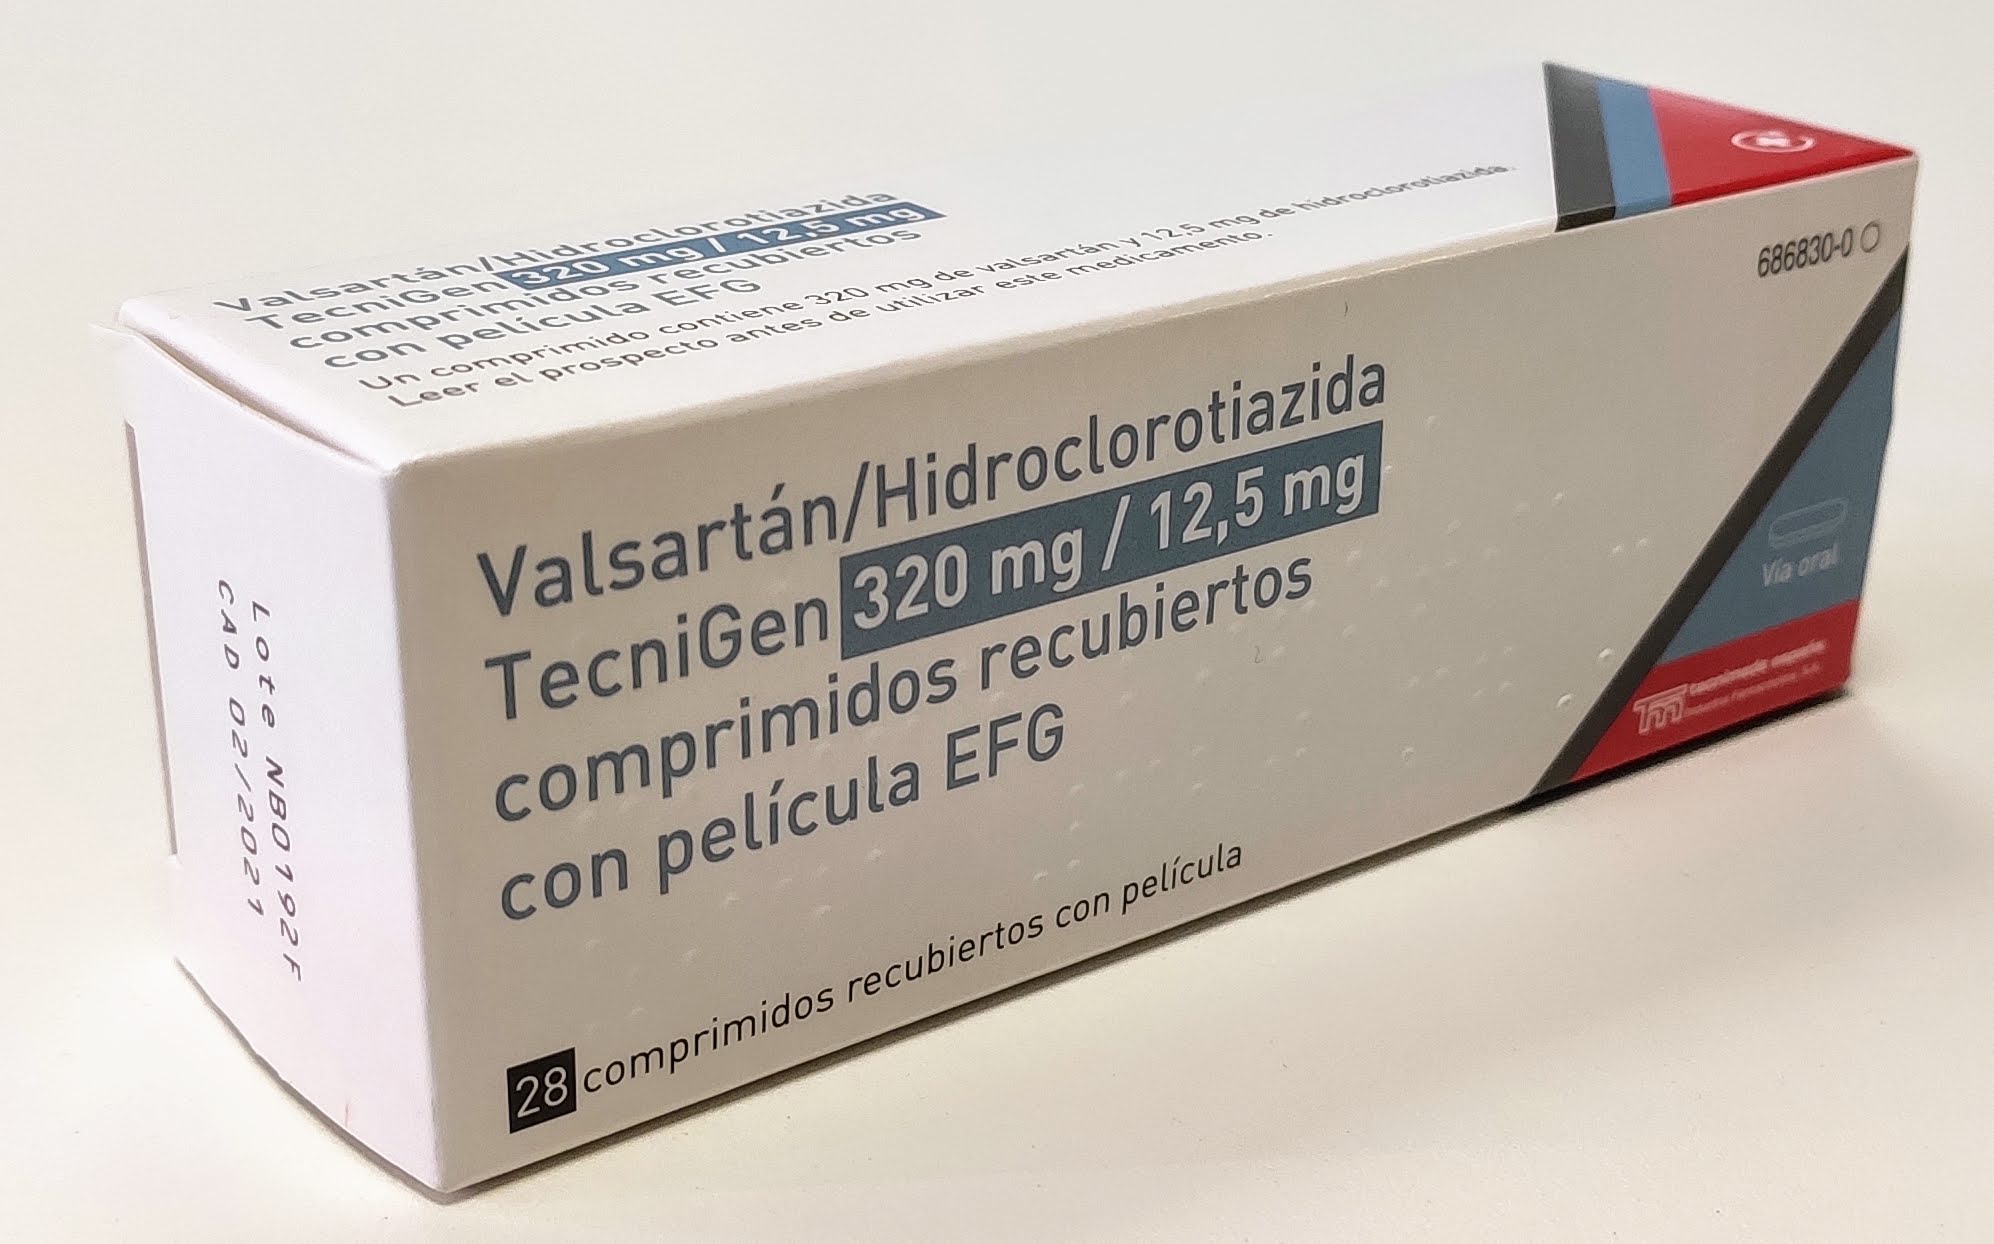 VALSARTAN/HIDROCLOROTIAZIDA TECNIGEN EFG 320 mg/12,5 mg 28 COMPRIMIDOS RECUBIERTOS